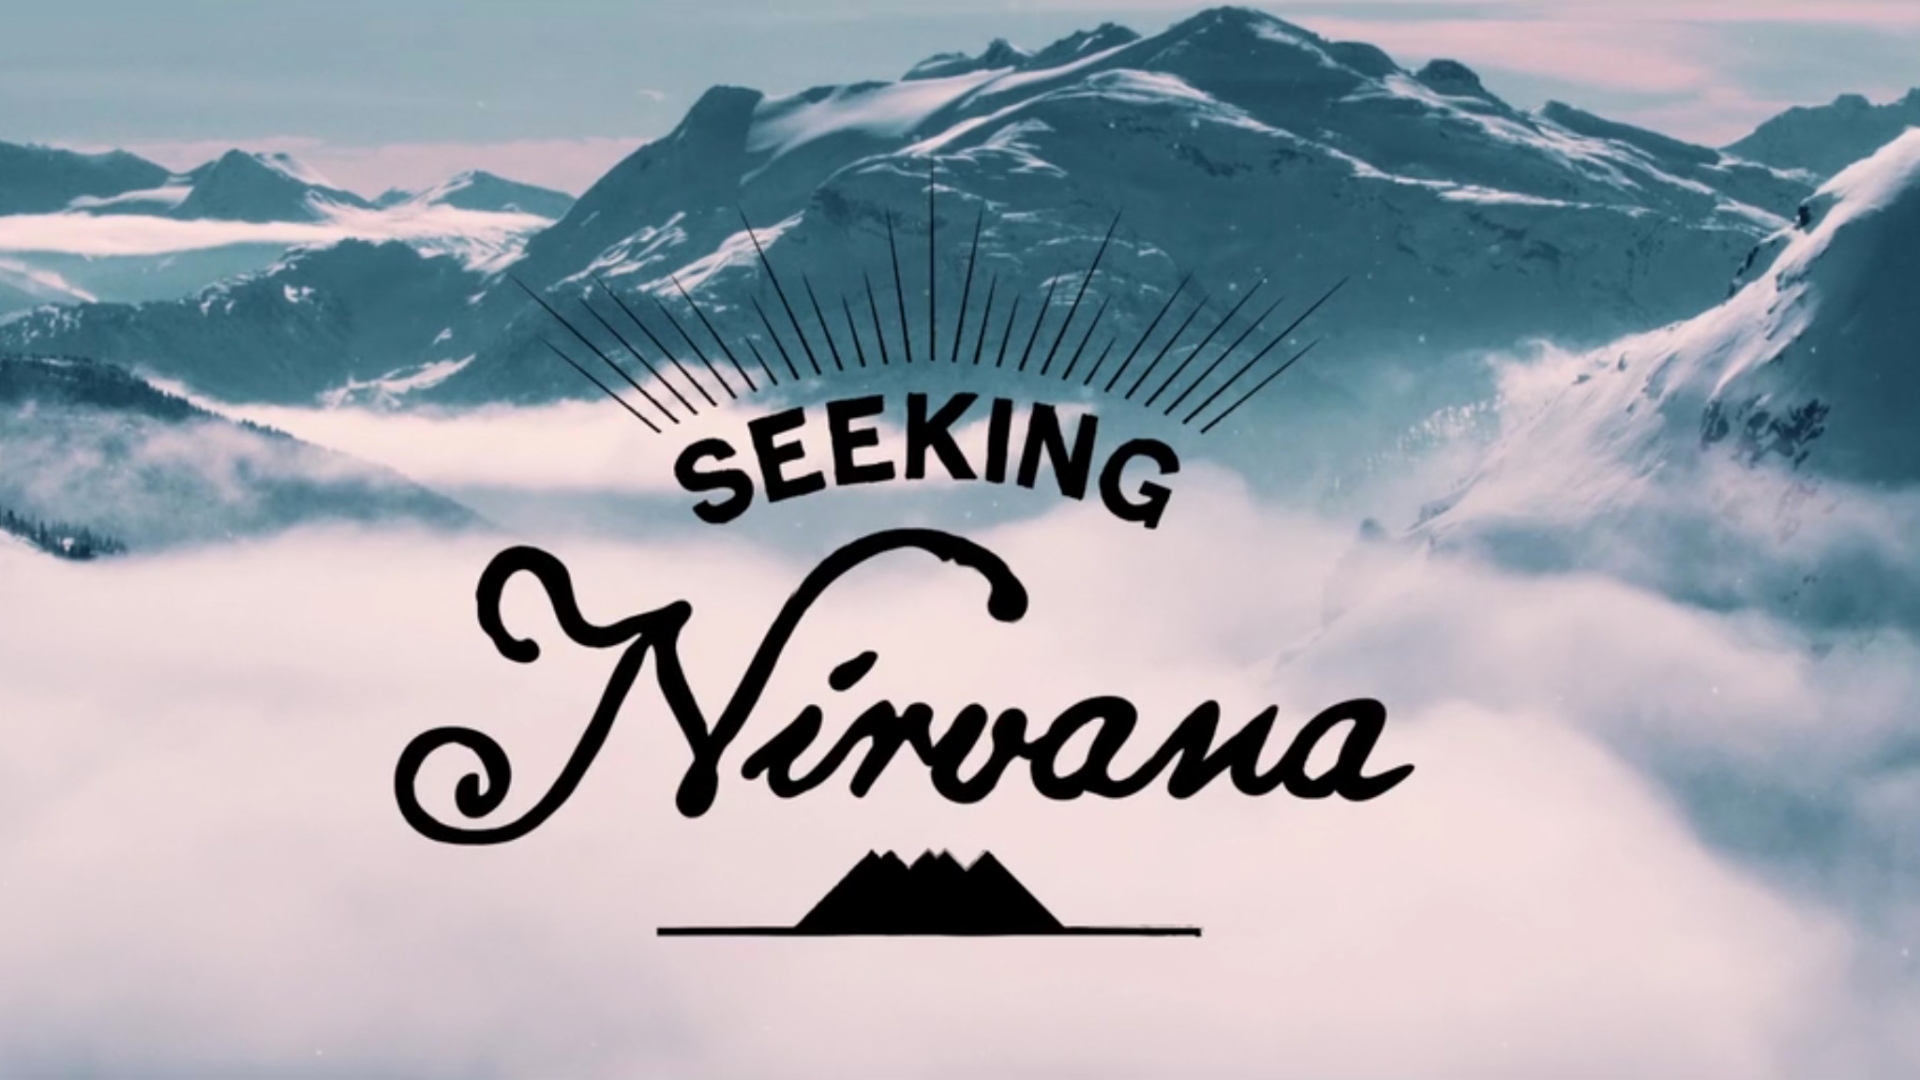 Seeking Nirvana: A Series of Ski Adventures